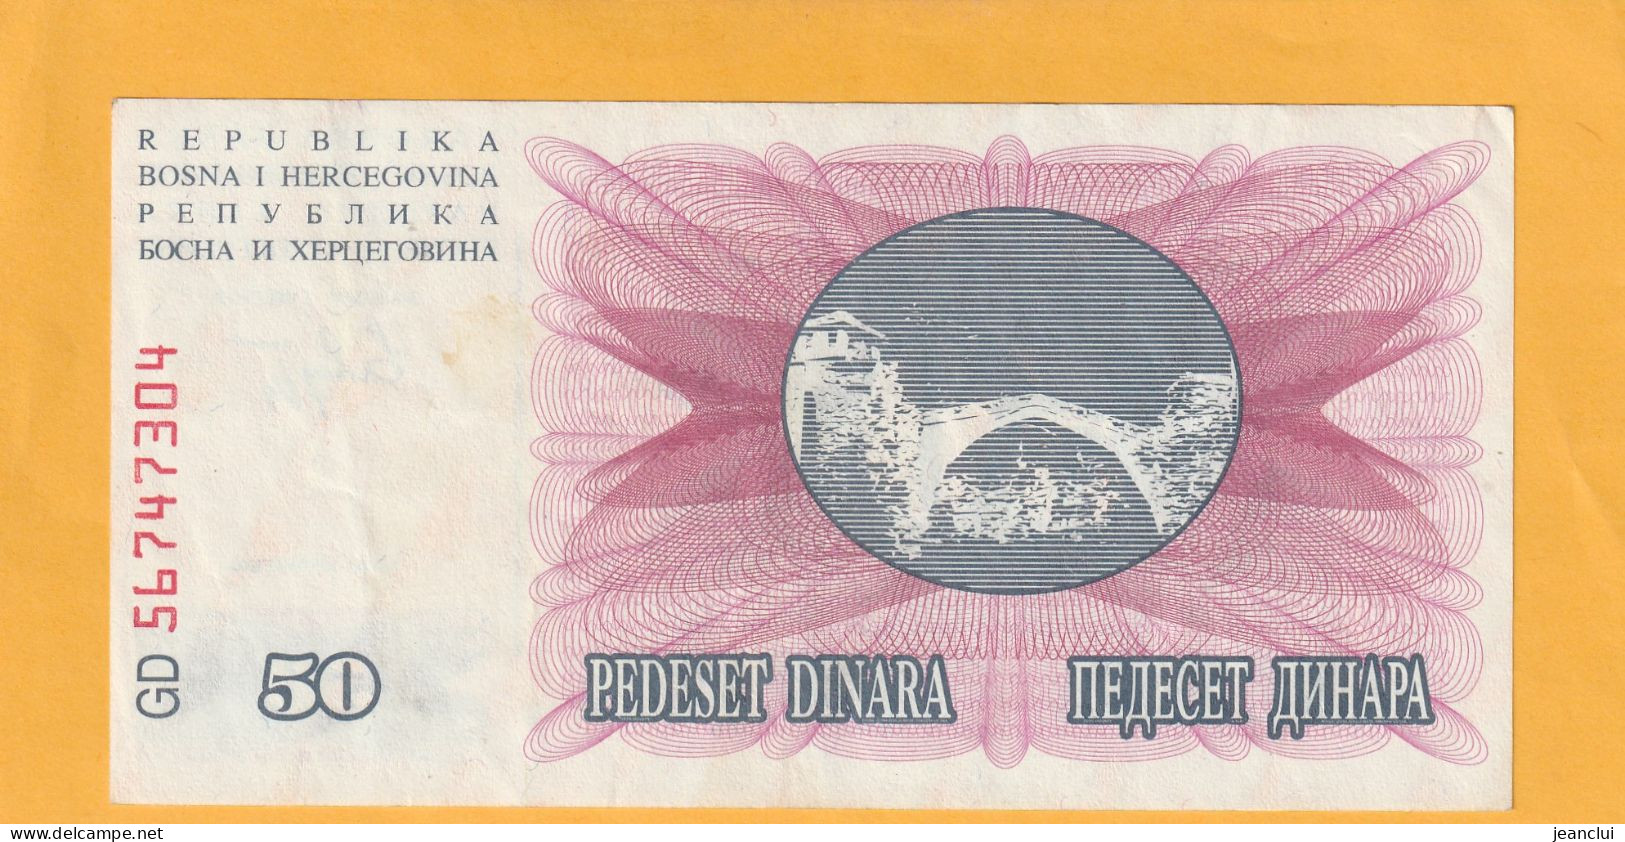 NARODNA BANKA BOSNE I HERCEGOVINE  .  50 DINARA  . 1-7-1992  .  N°  56 74 7304  .  2 SCANNES  .  BILLET EN TRES BEL ETAT - Bosnie-Herzegovine